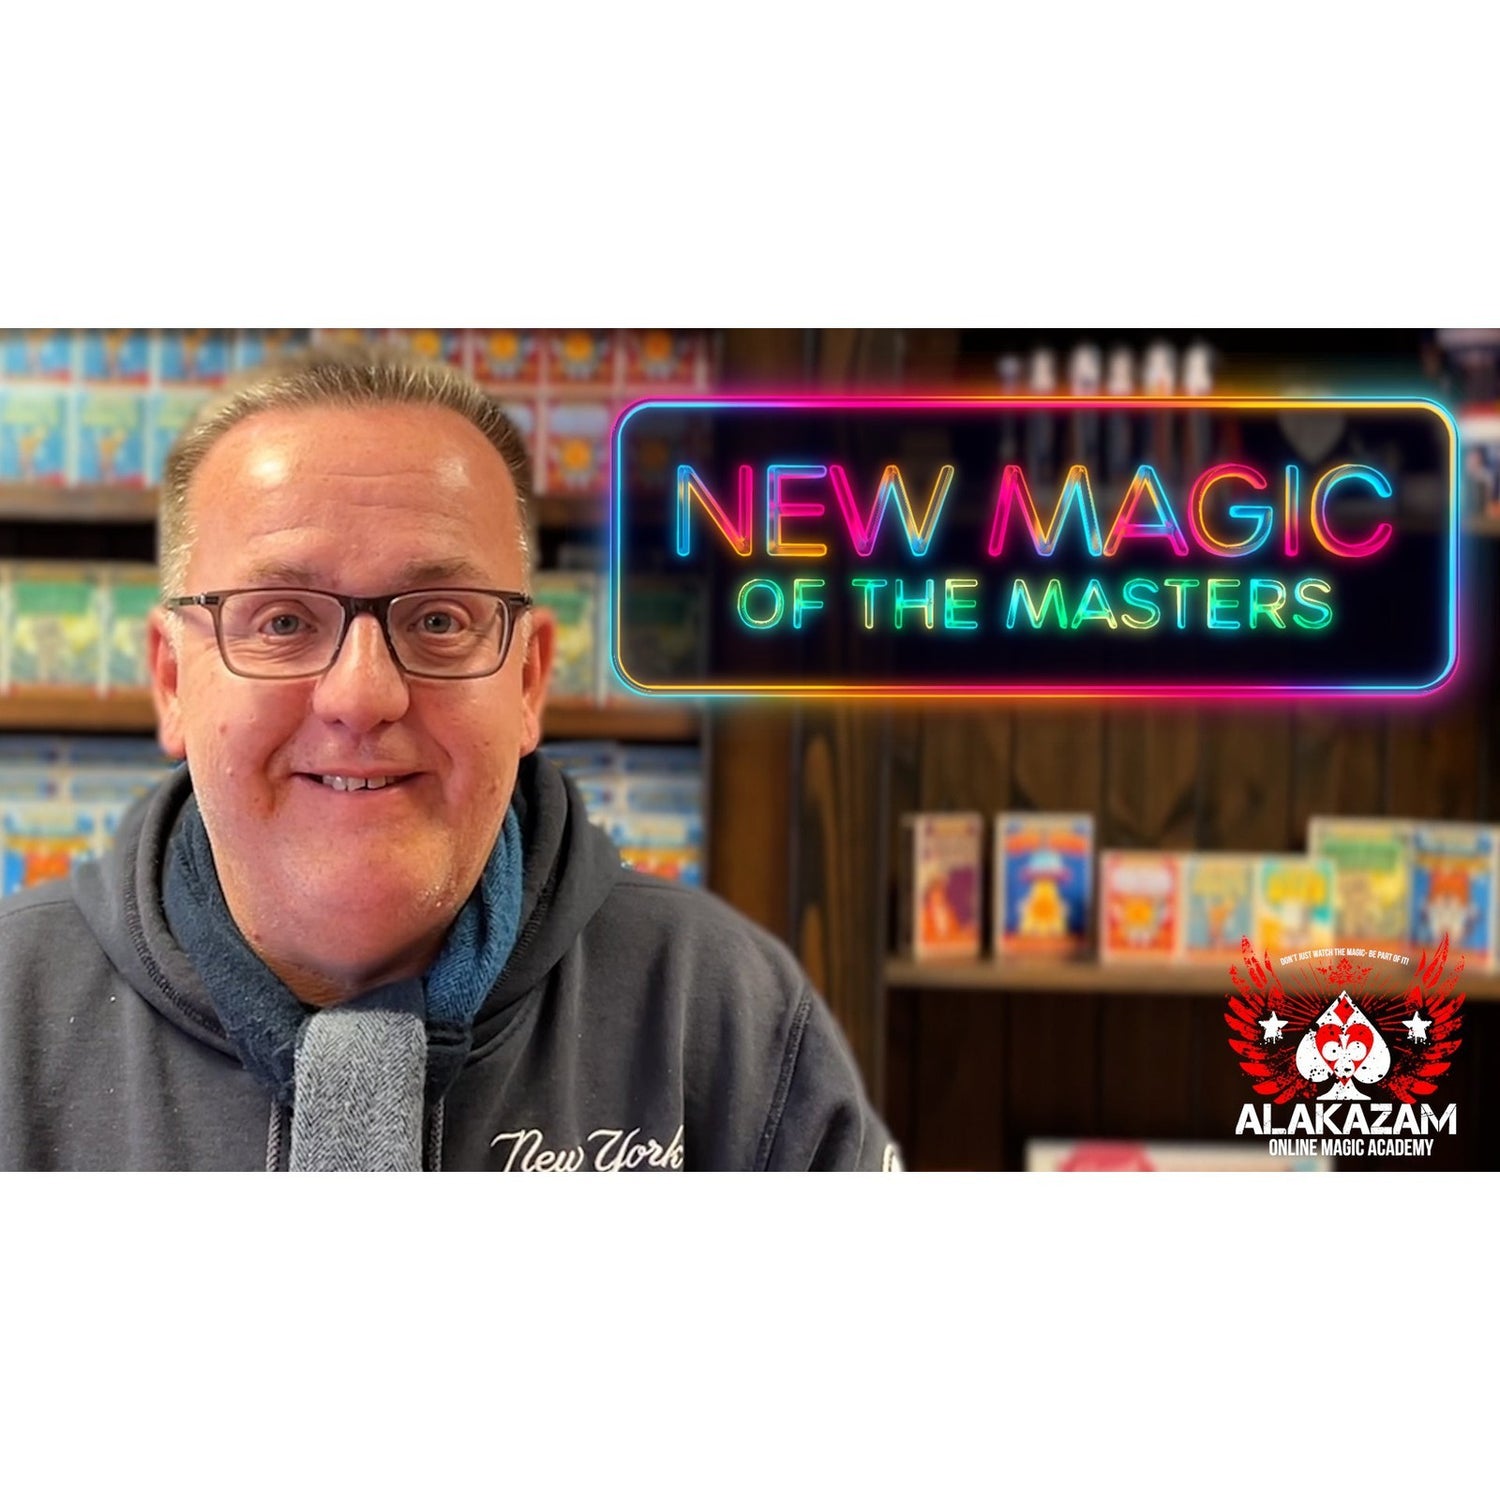 Alakazam Online Magic Academy - John Carey - New Magic Of The Masters